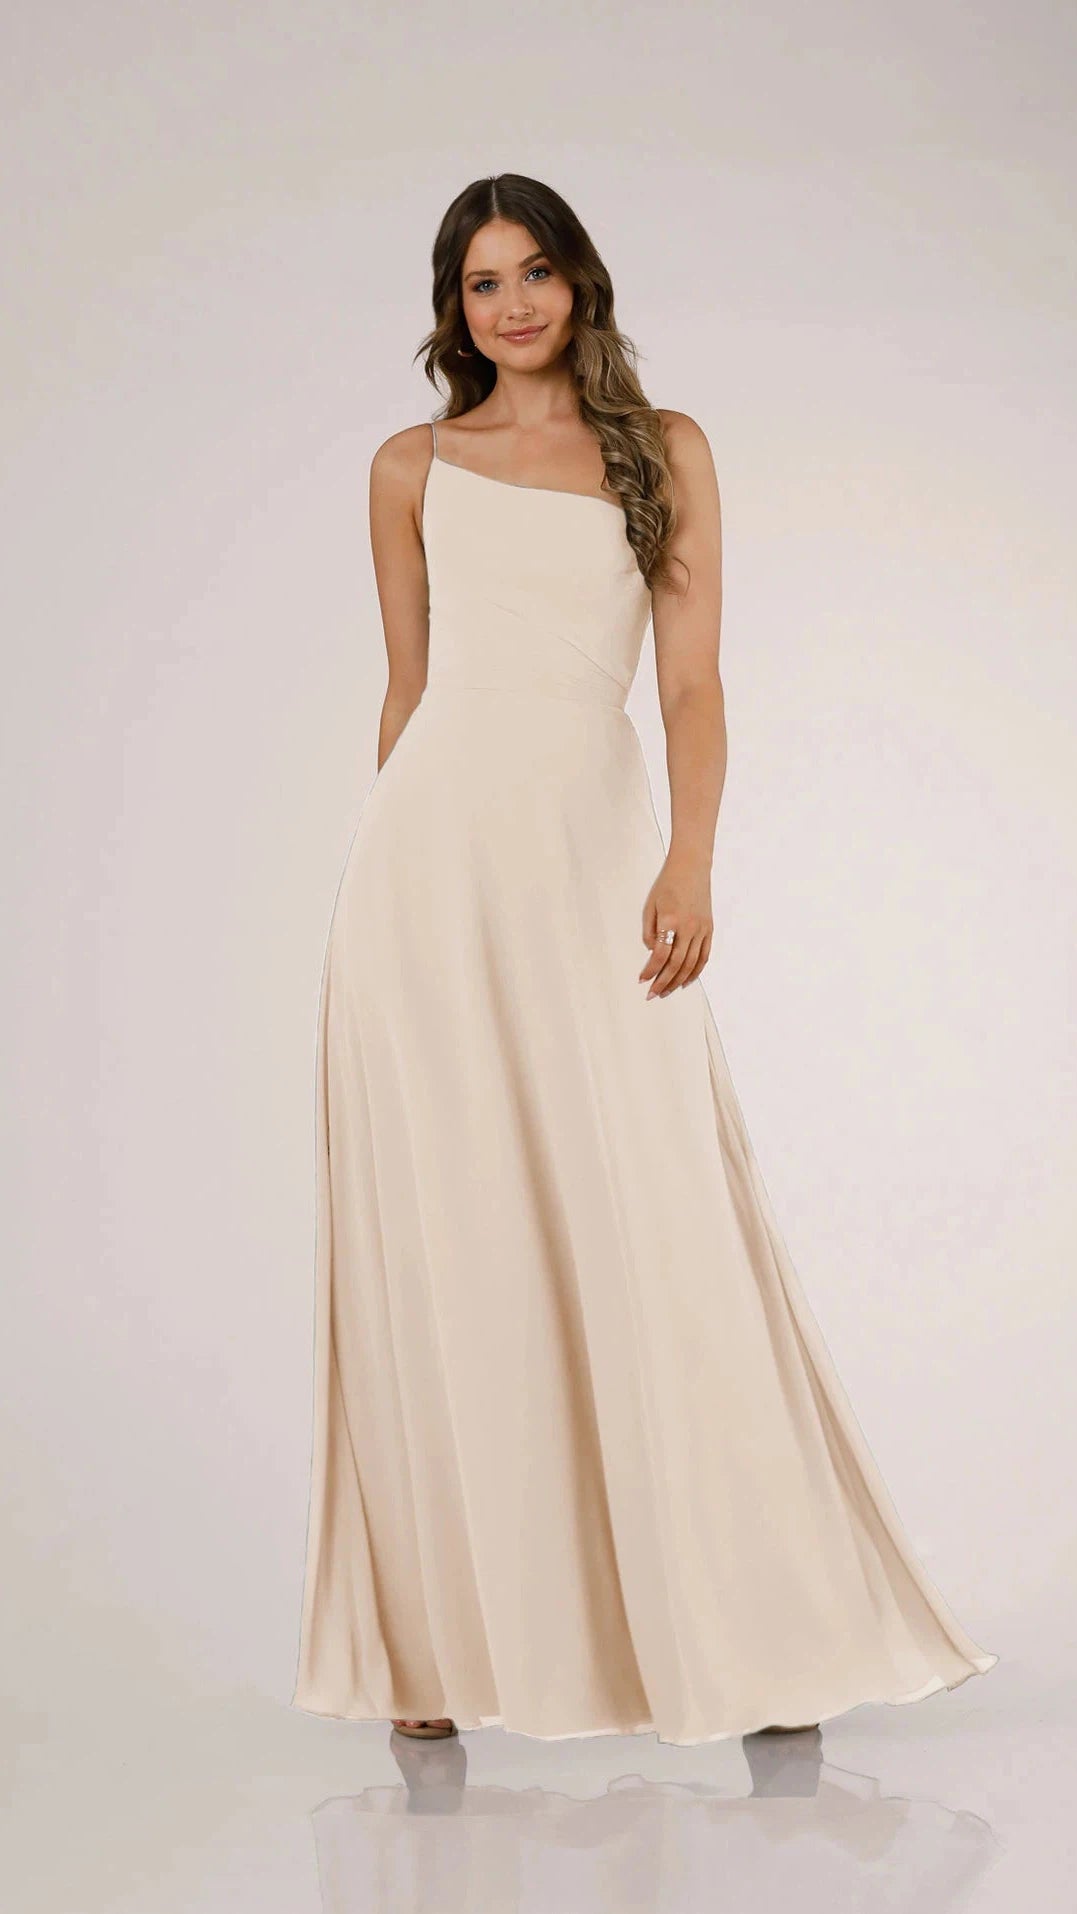 Sorella Vita 9500 Bridesmaid Dress